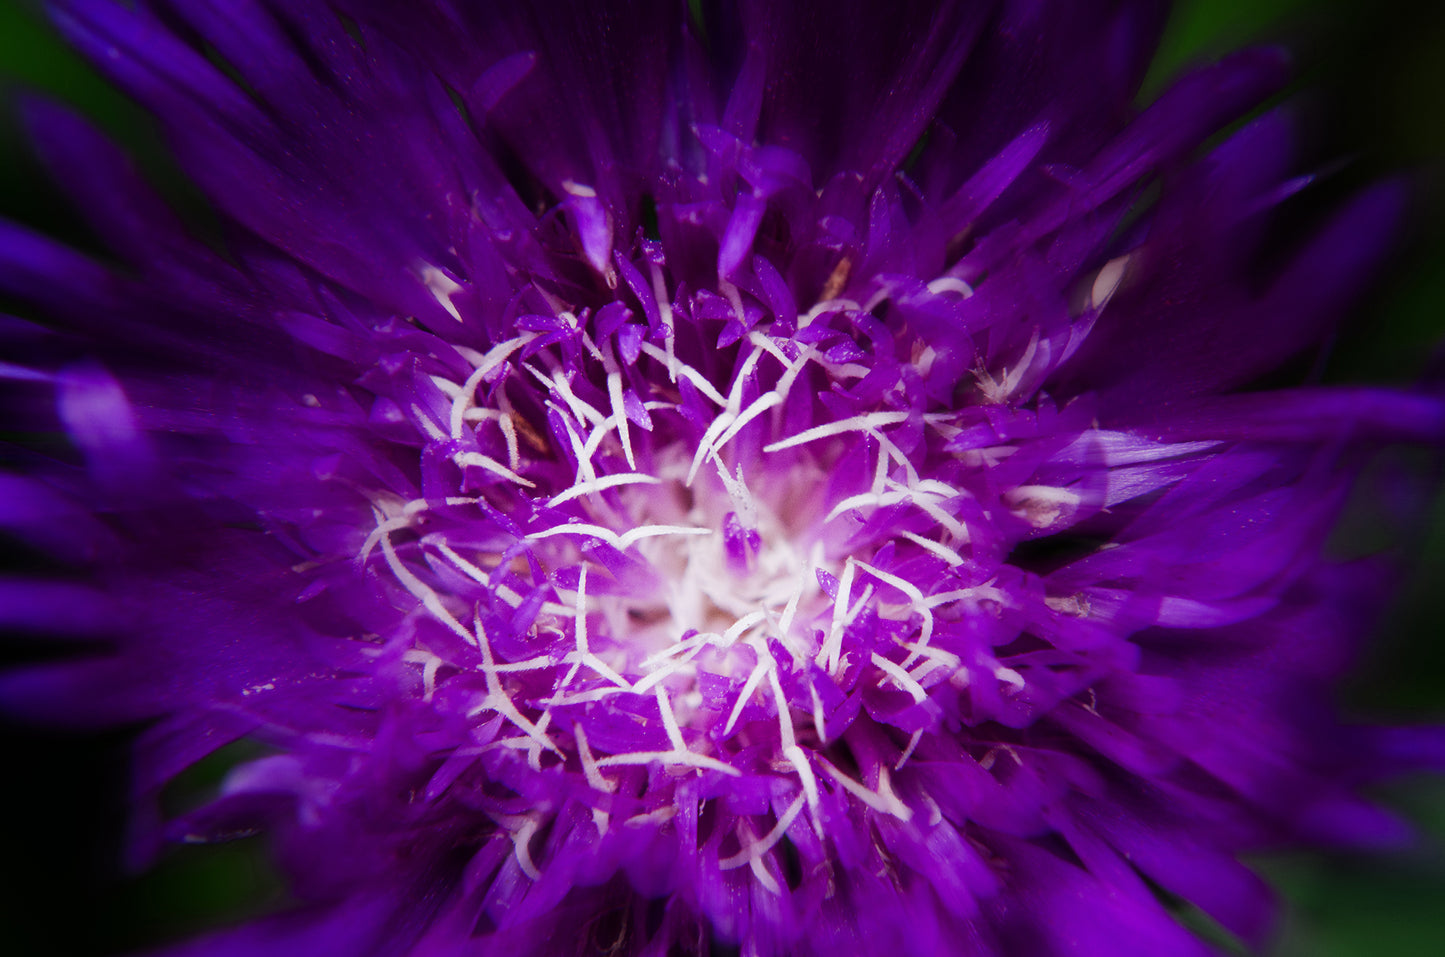 Best Art Print Websites: Dark Purple and White Aster Bloom Close-up Botanical / Floral / Flora / Flowers / Nature Photograph Canvas Wall Art Print - Artwork